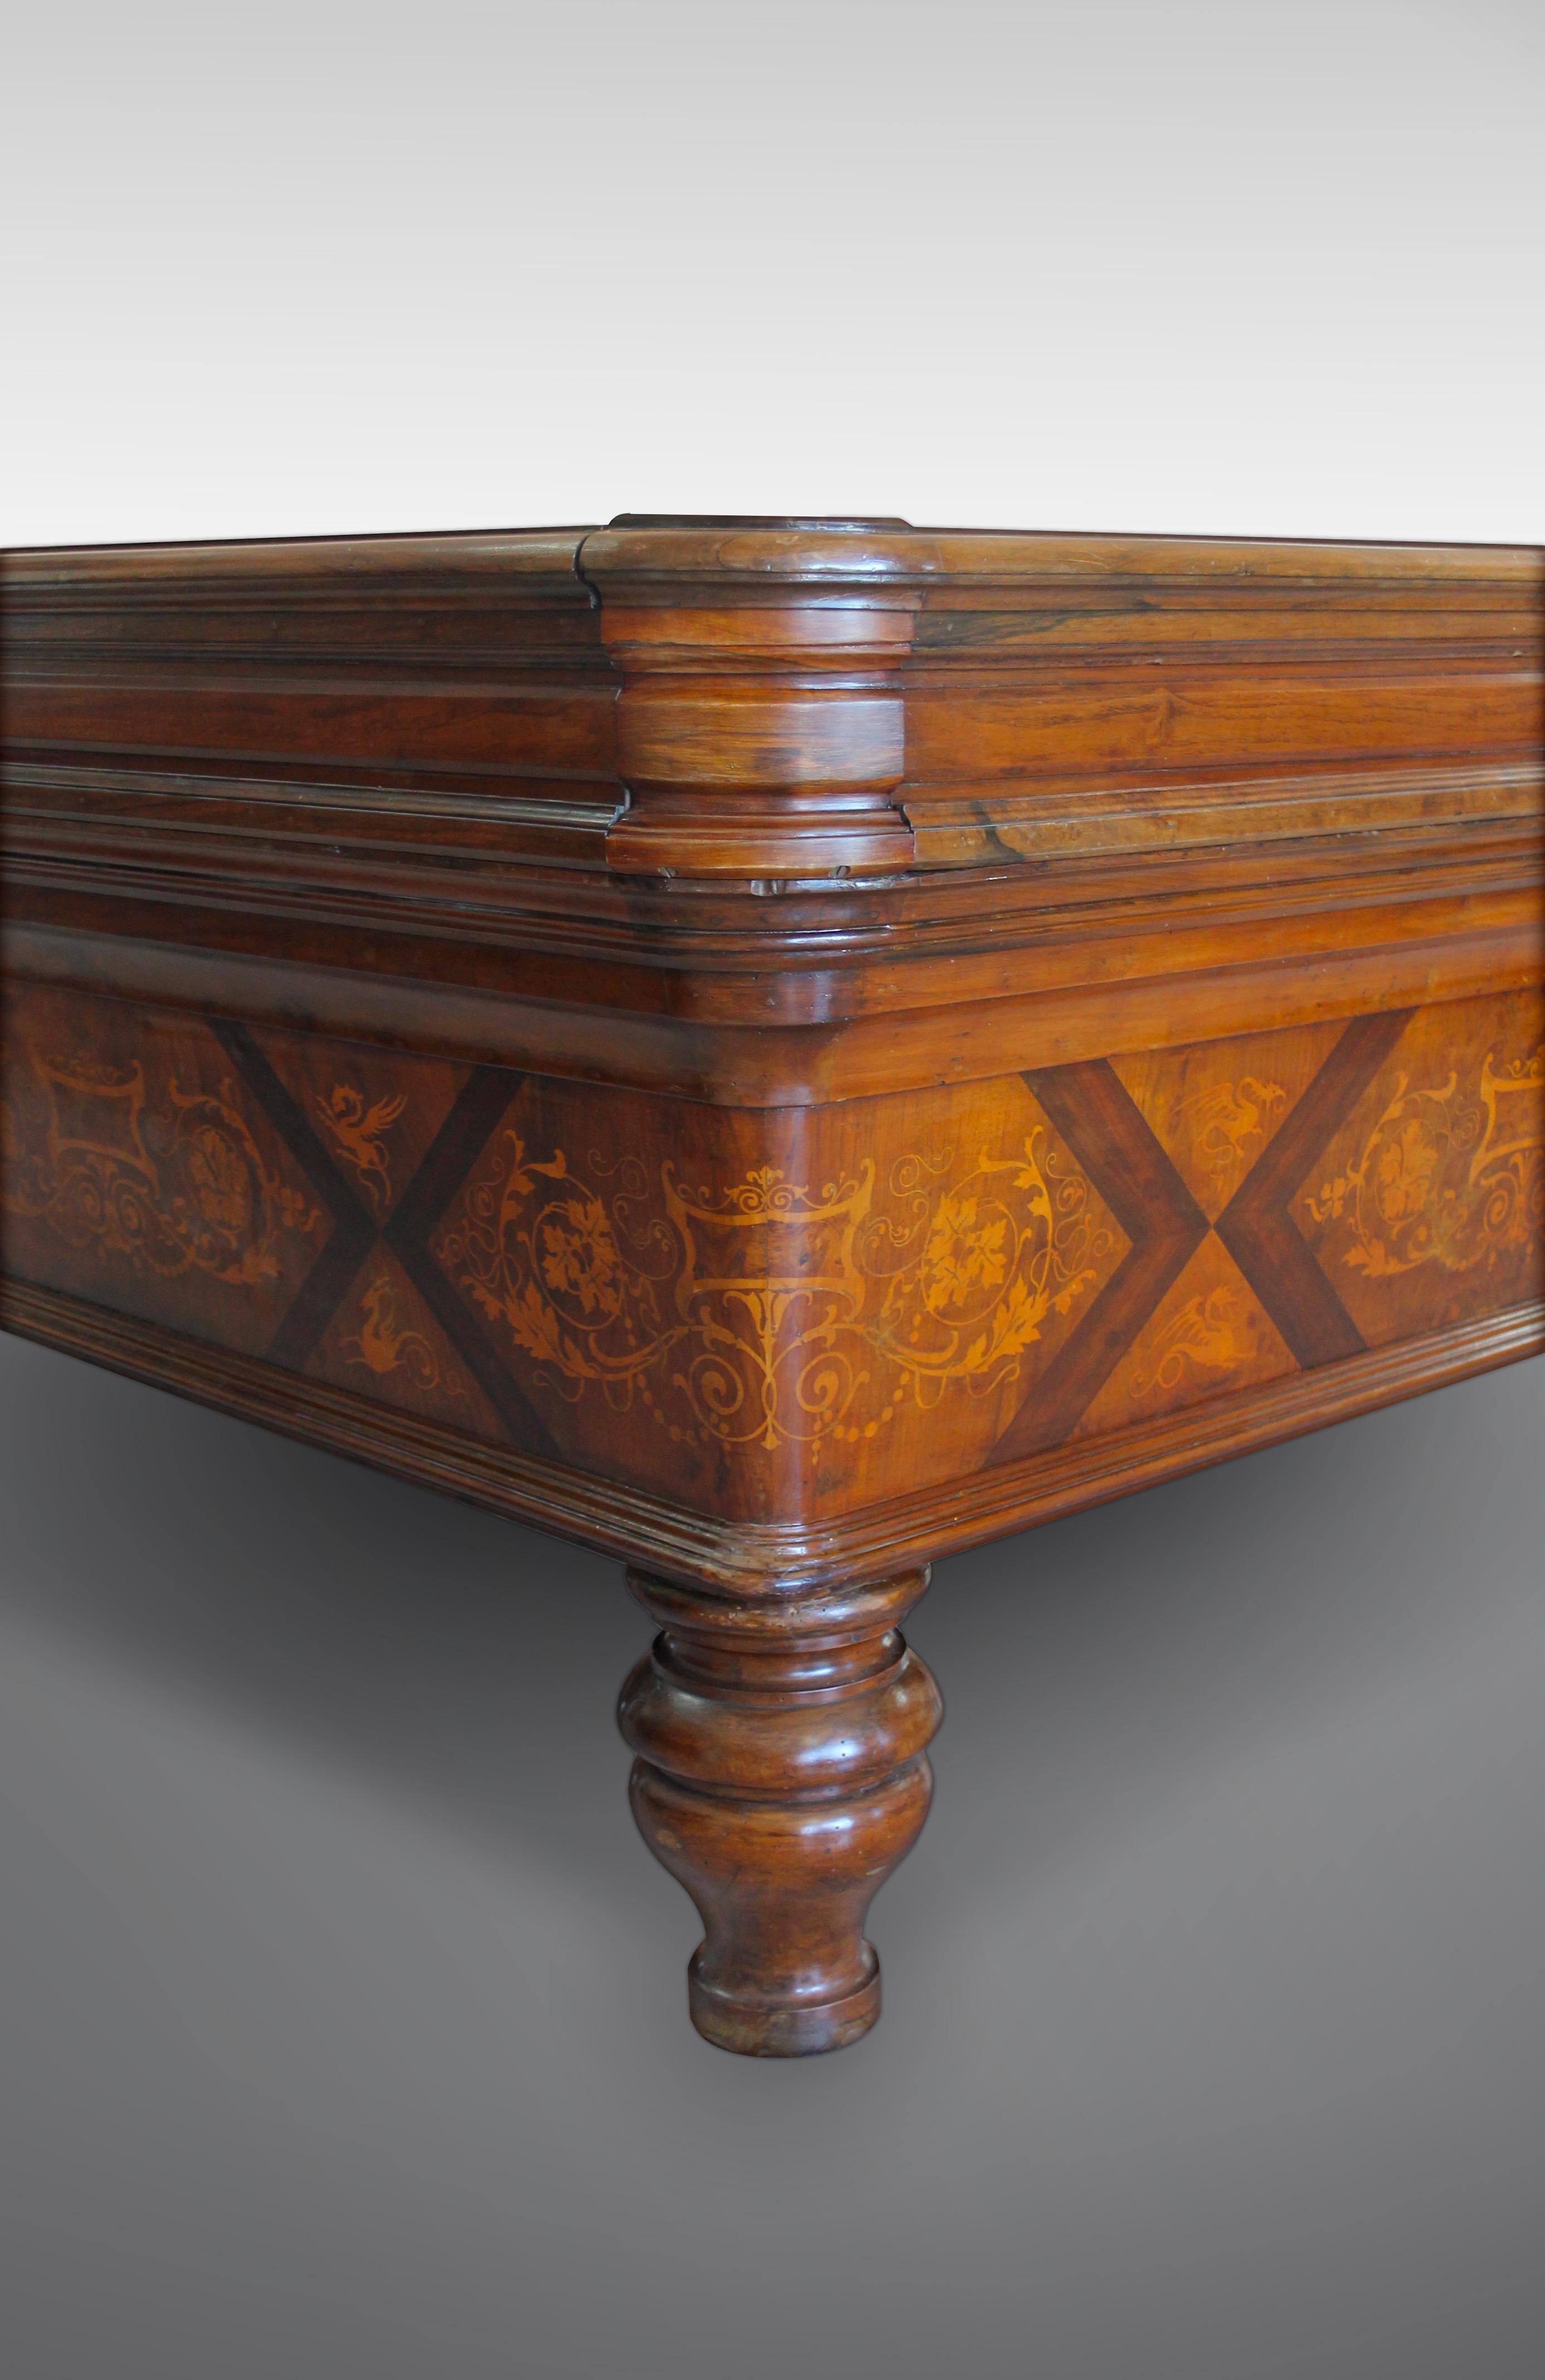 European Historical Billiards Table Belonged to Gabriele D’Annunzio, Italy, 1820s